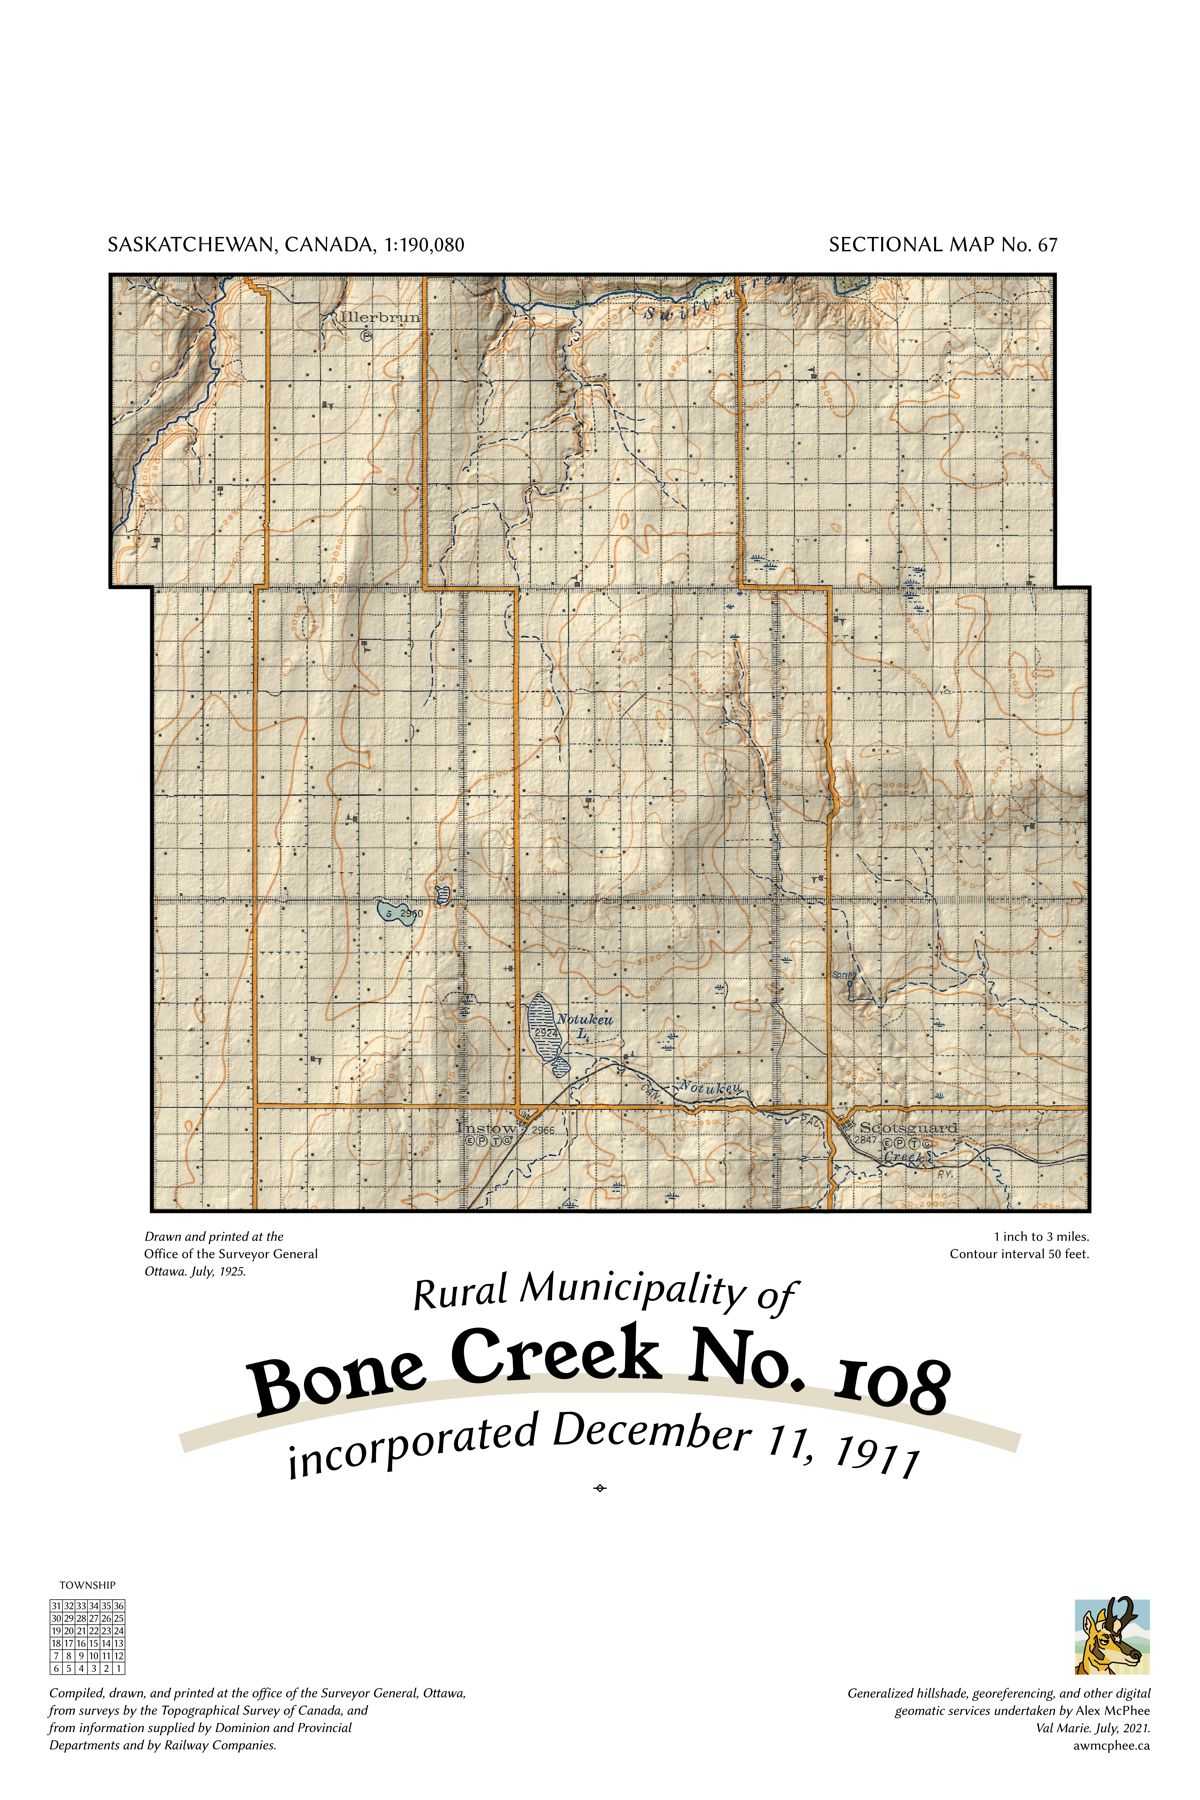 A map of the Rural Municipality of Bone Creek No. 108.